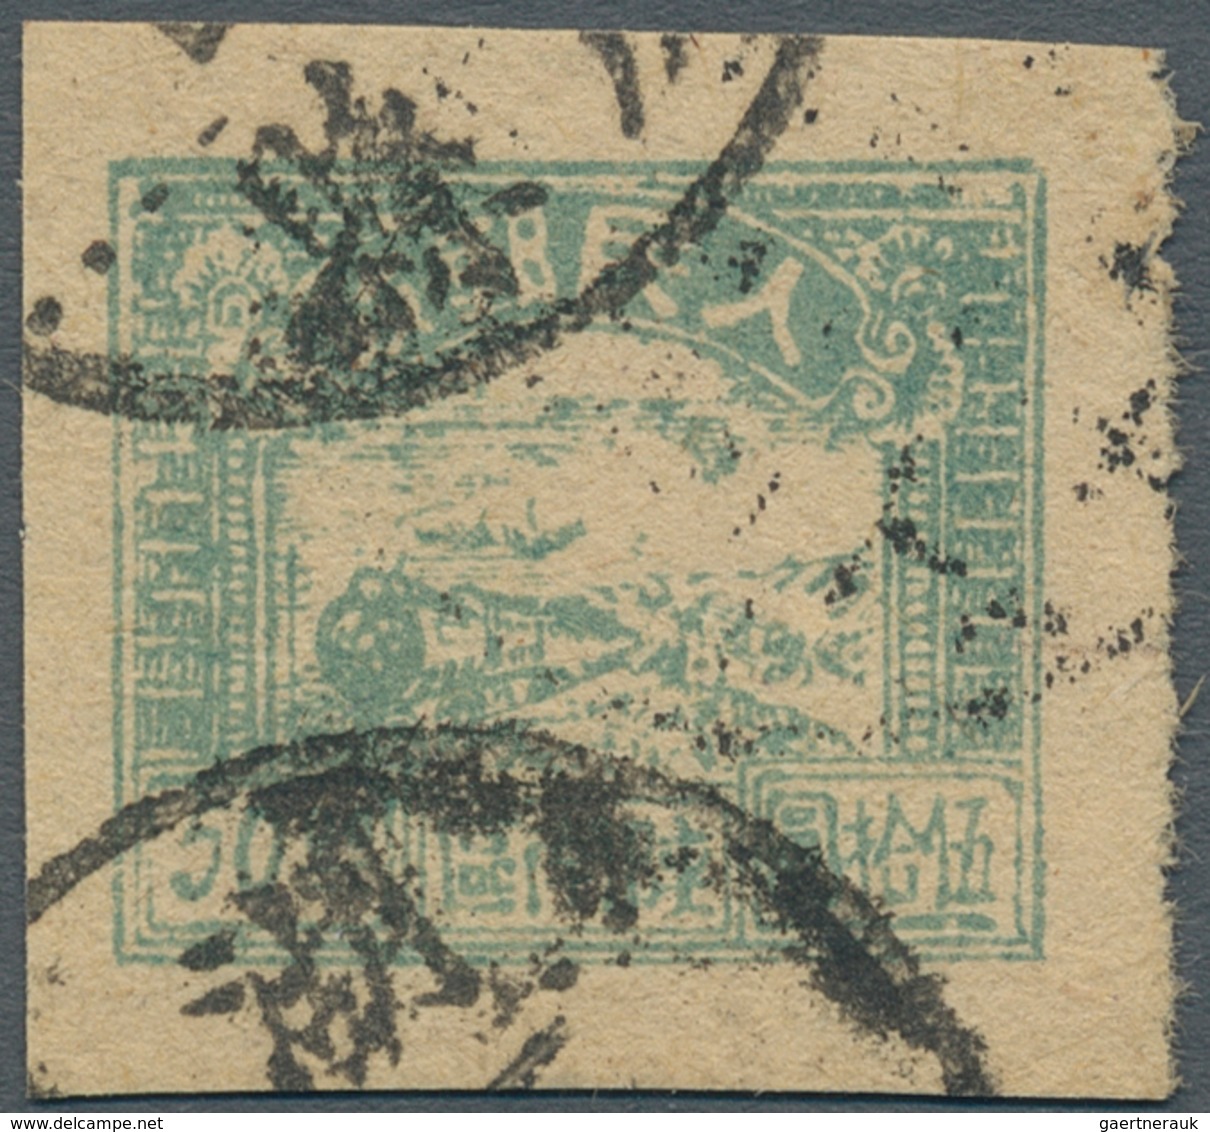 China - Volksrepublik - Provinzen: Northwest China Region, South Shaanxi, 1949, “Locomotive”, $50, U - Other & Unclassified